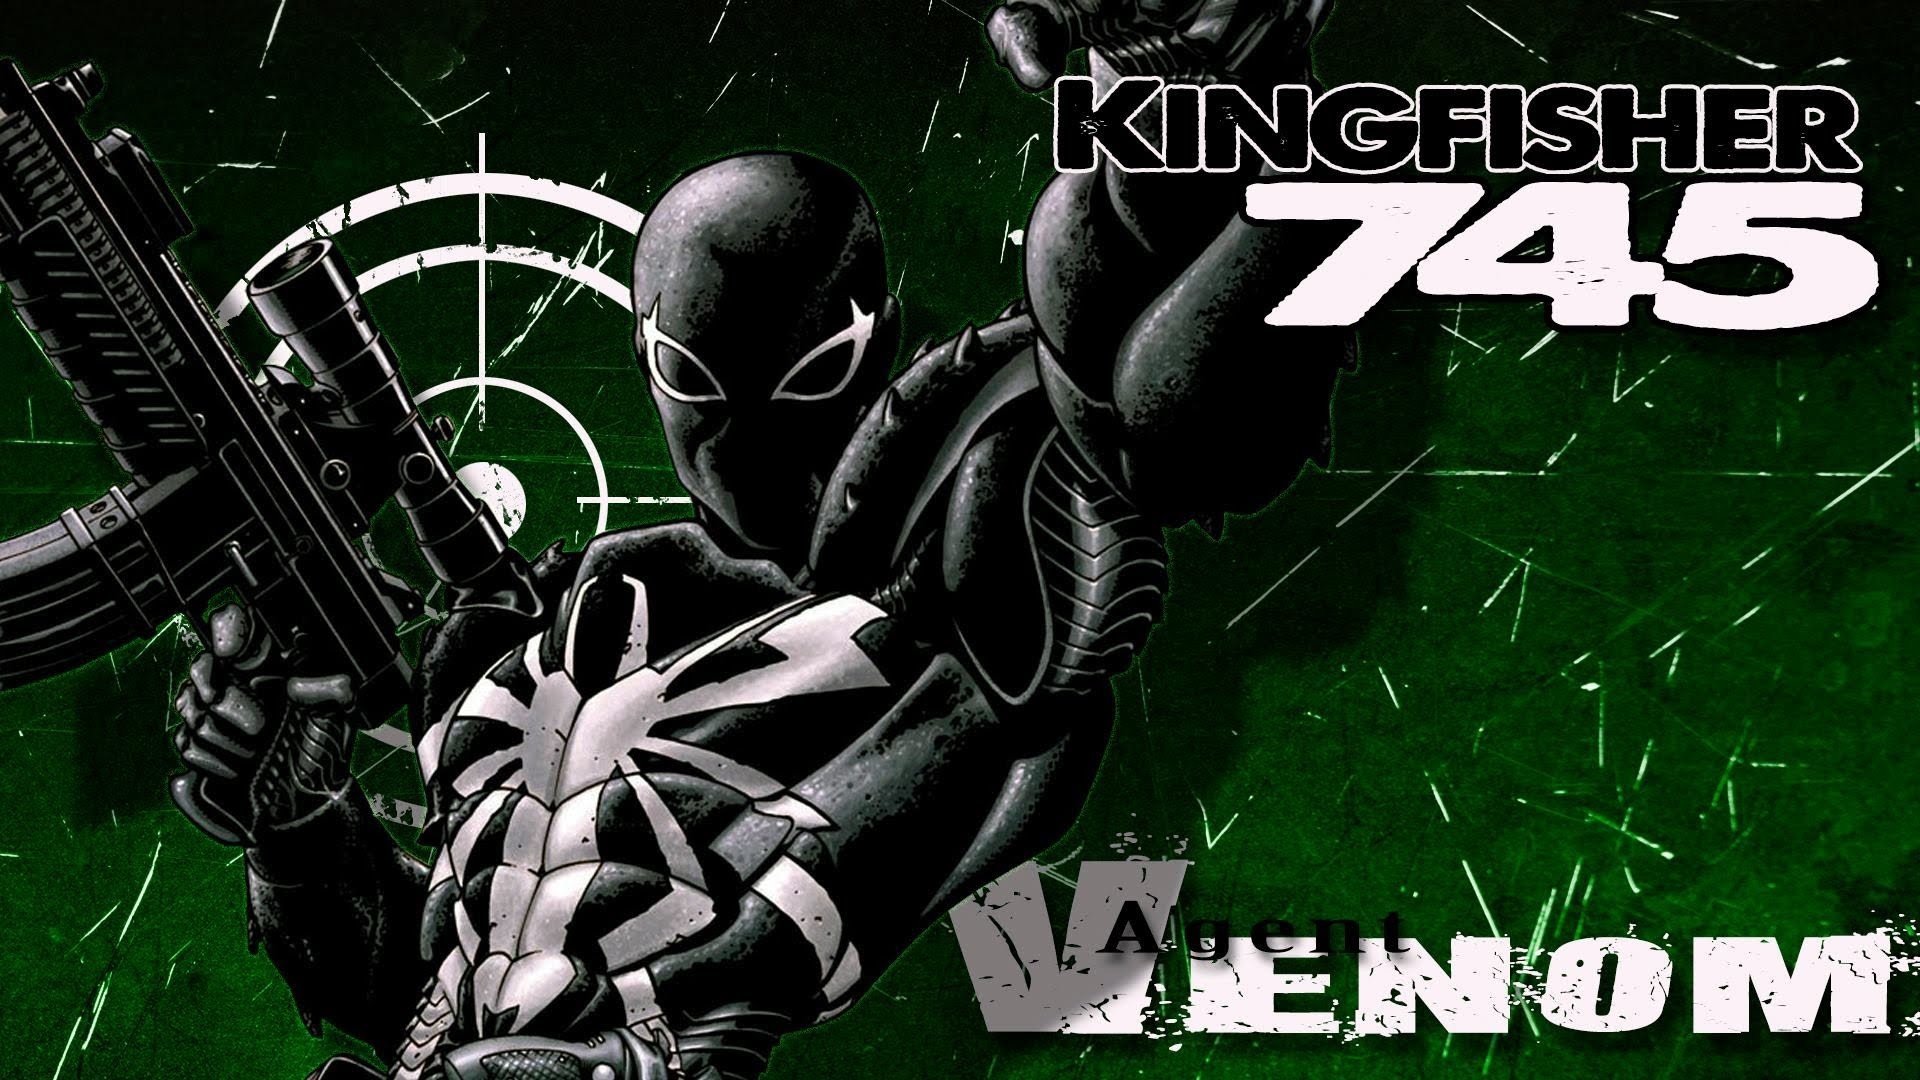 Marvel Avengers Alliance Agent Venom PvP Gameplay at Level 7 – YouTube